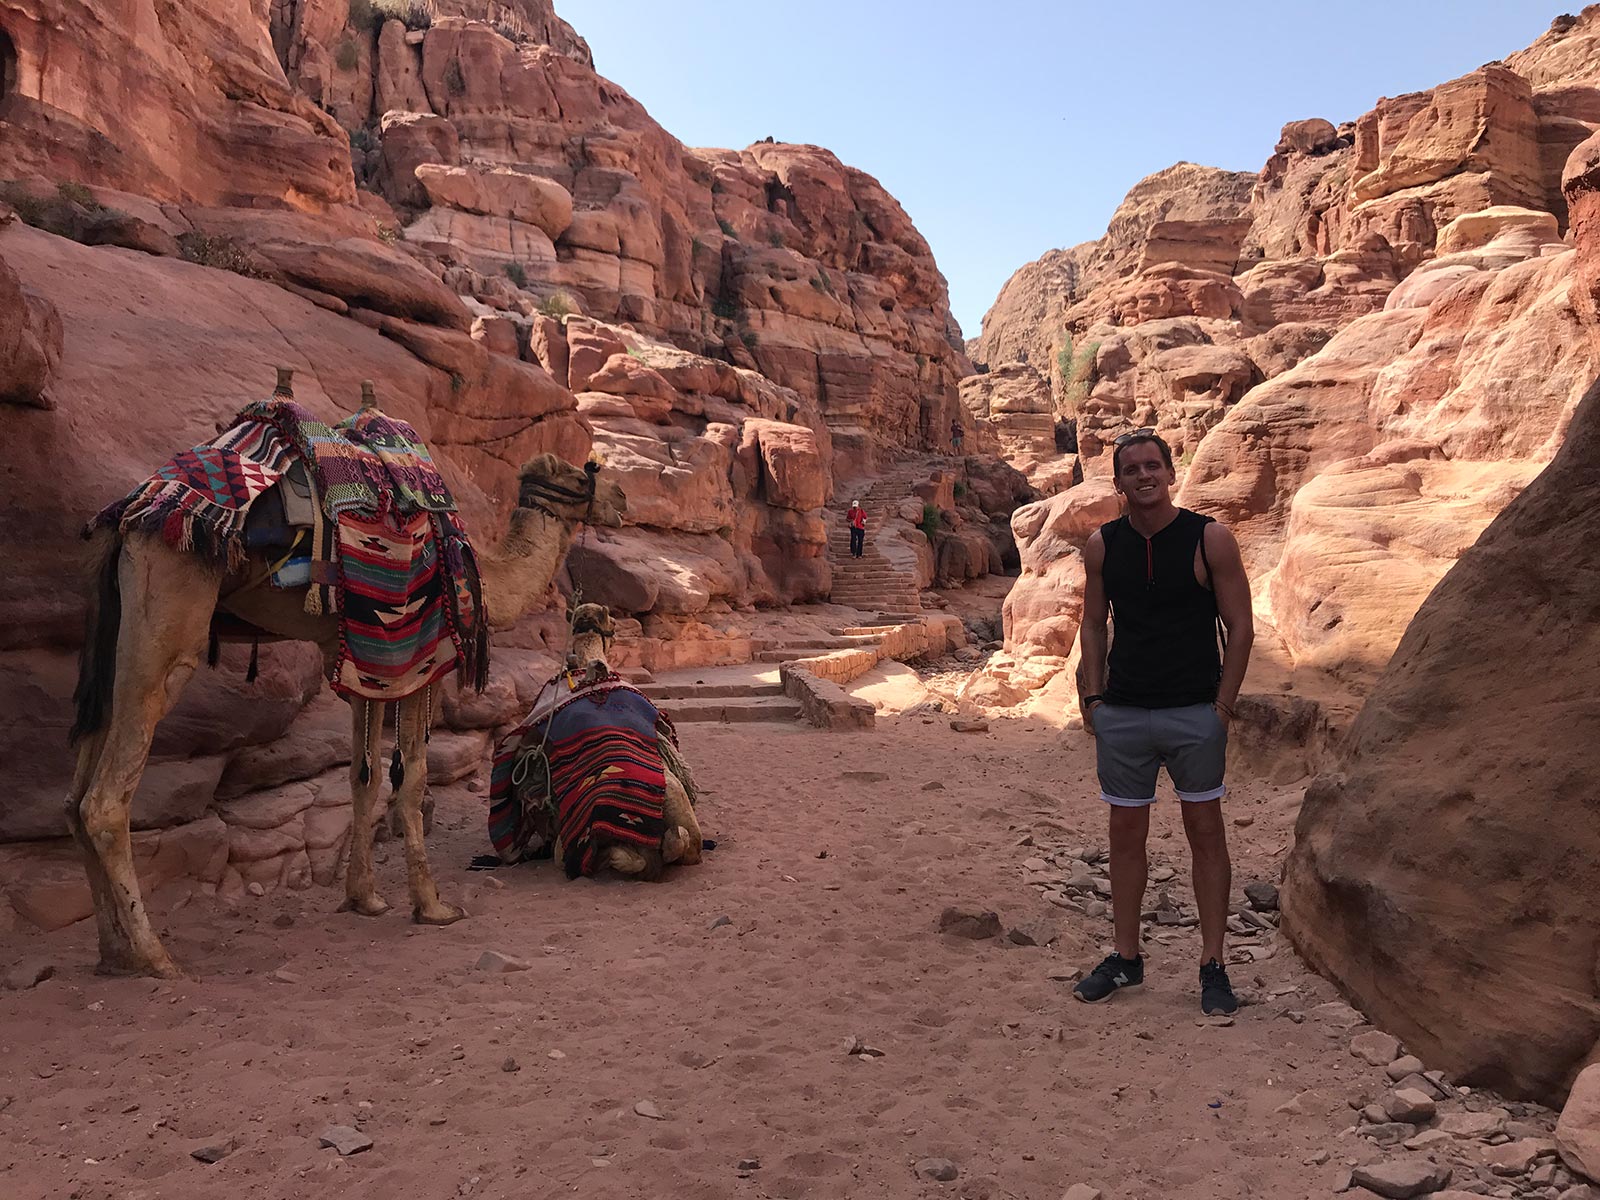 David Simpson with camels and incredible rock formations in Petra, Jordan. Petra, an incredible wonder